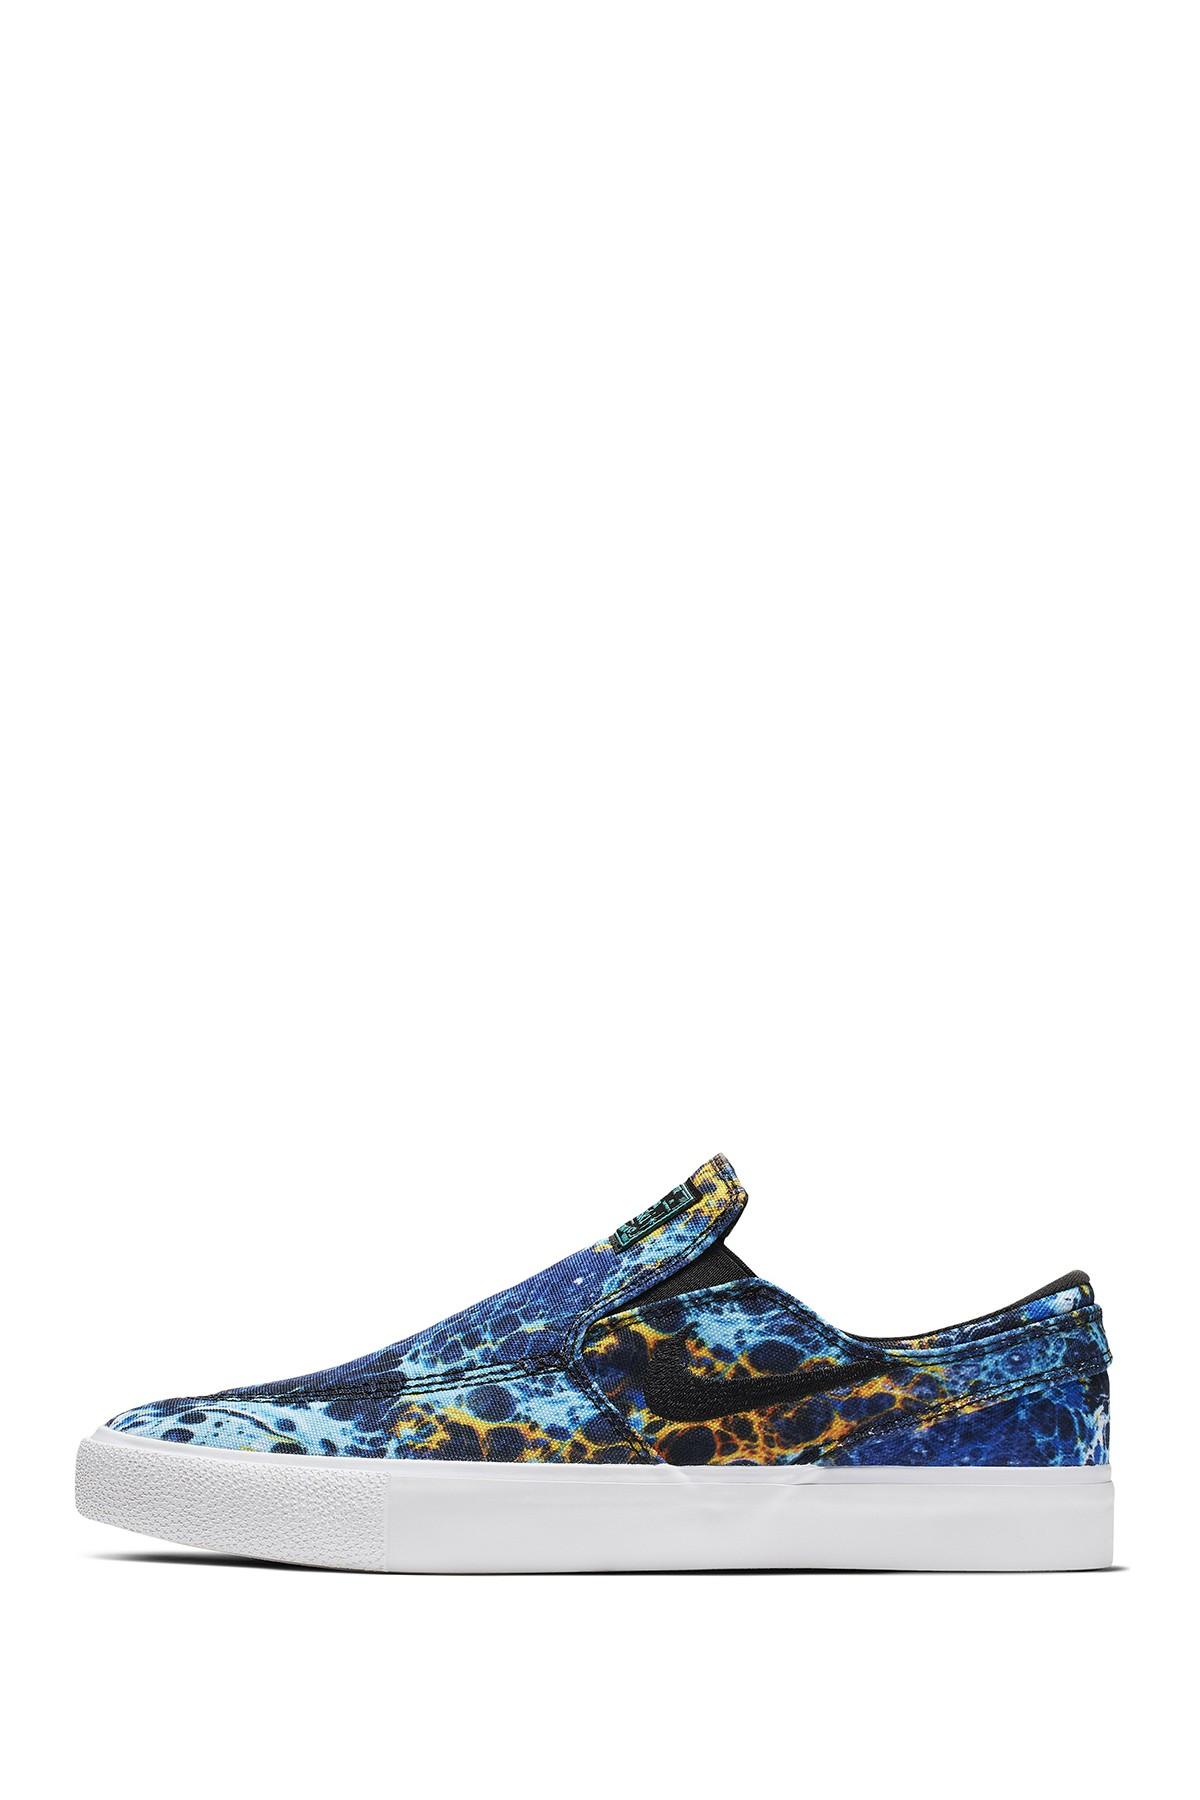 Nike Sb Zoom Stefan Janoski Slip Canvas Rm Premium Skate Shoe in Blue for  Men - Lyst